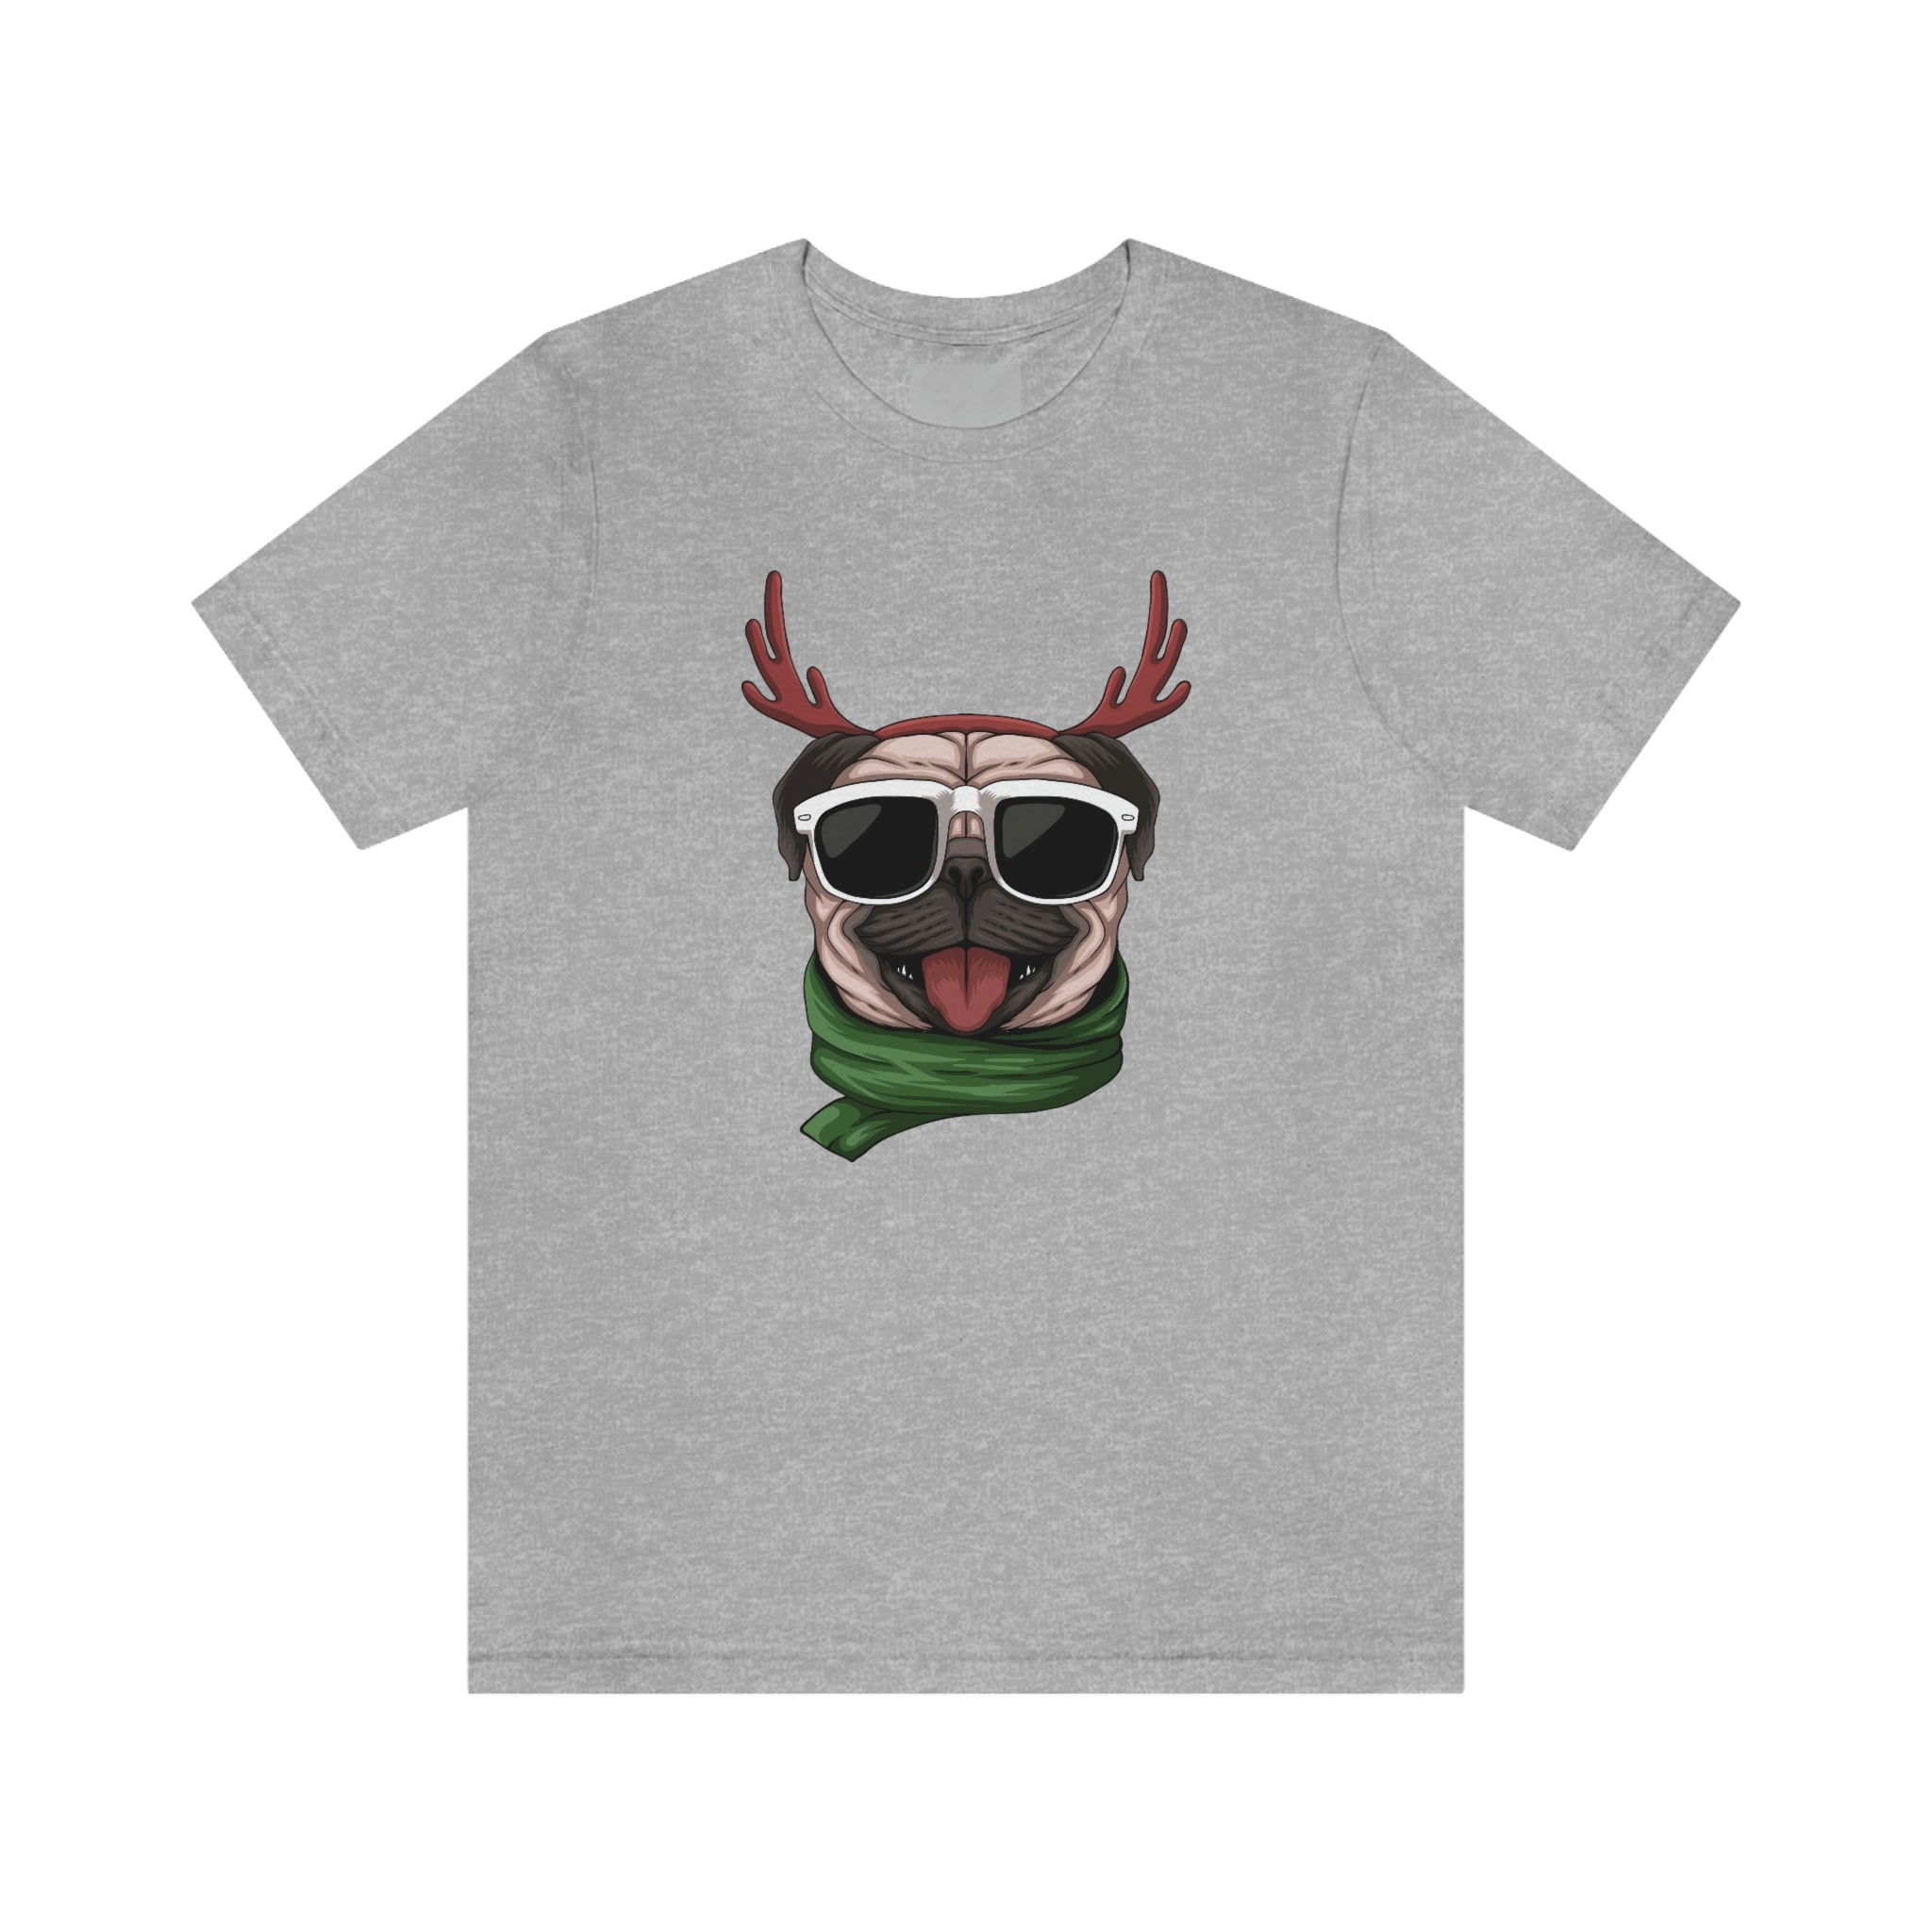 Christmas Pug Wearing Antlers Shirt